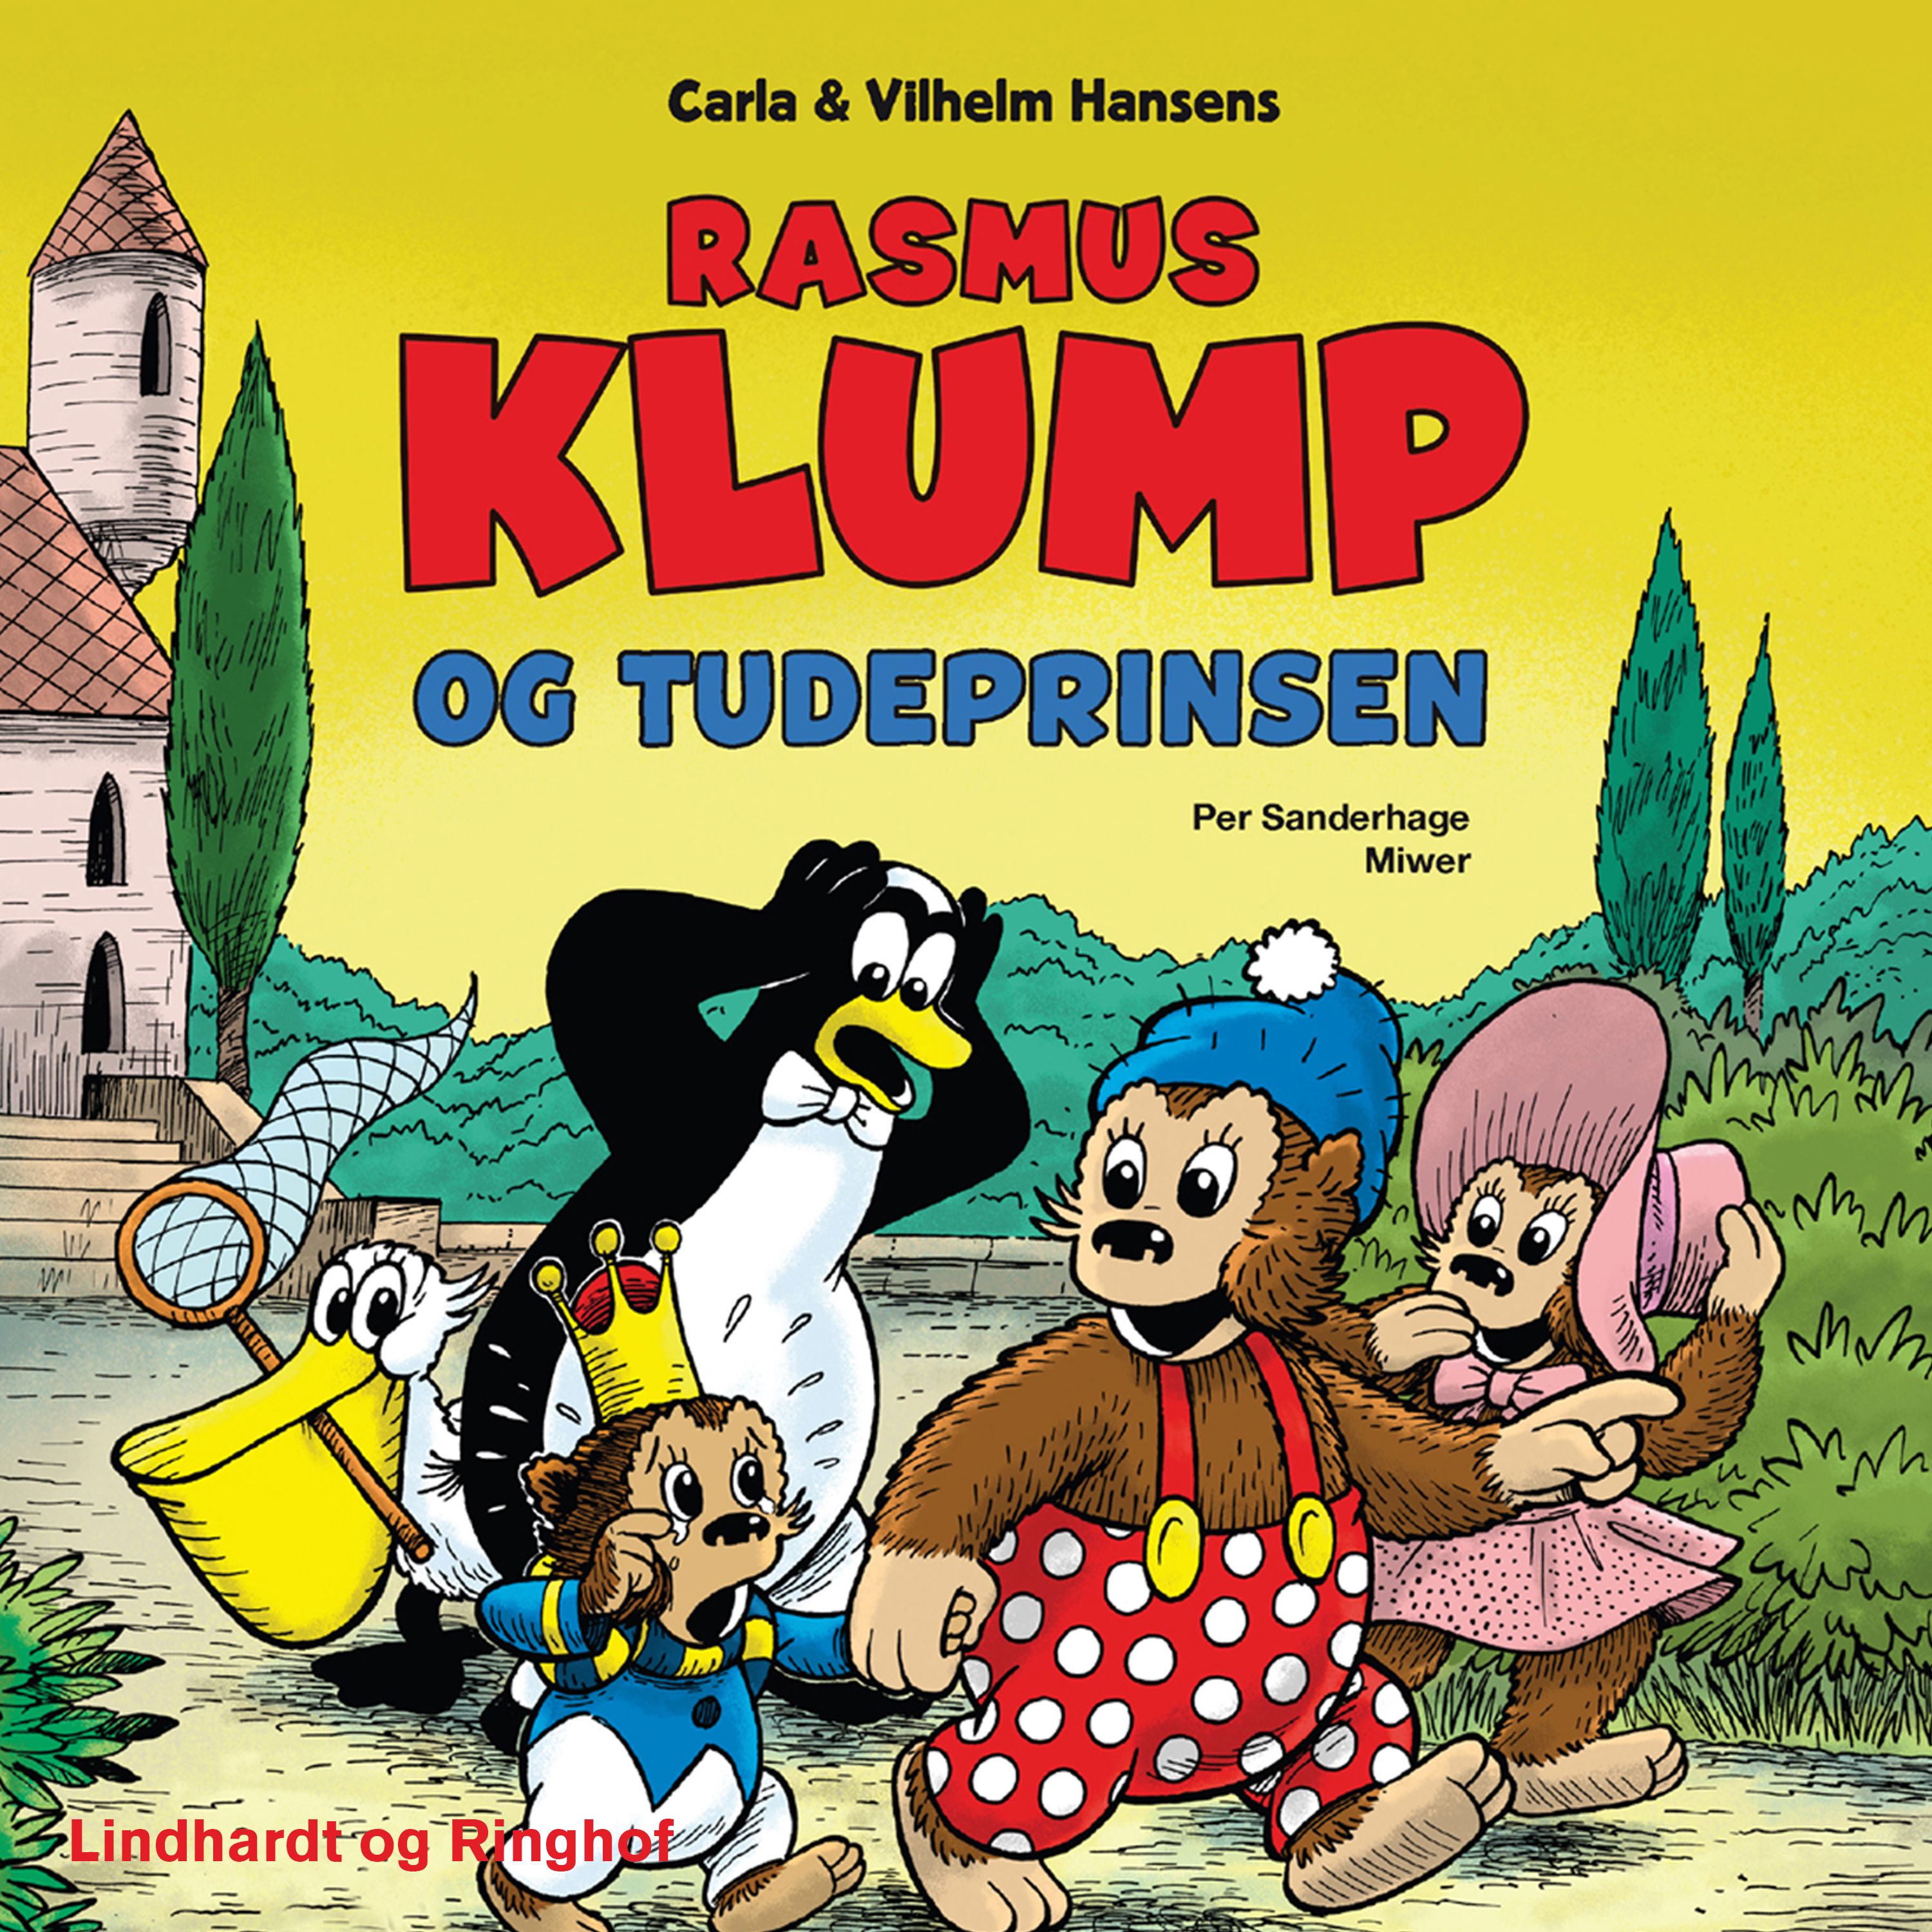 Rasmus Klump og tudeprinsen, audiobook by Per Sanderhage